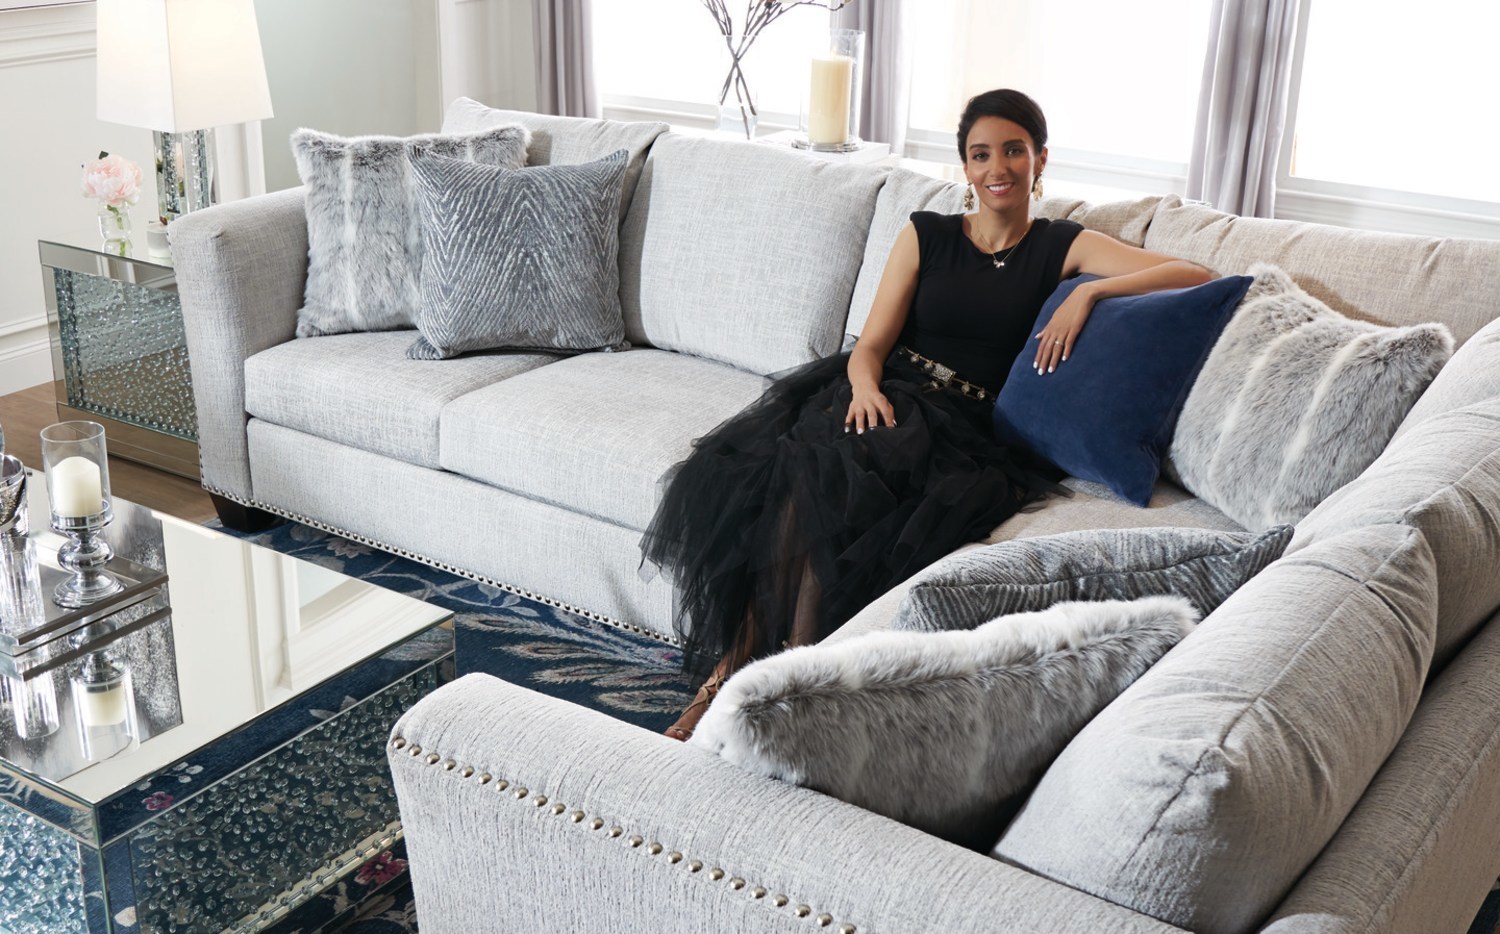 Value City Furniture Announces Partnership With Interior Design Celebrity Farah Merhi